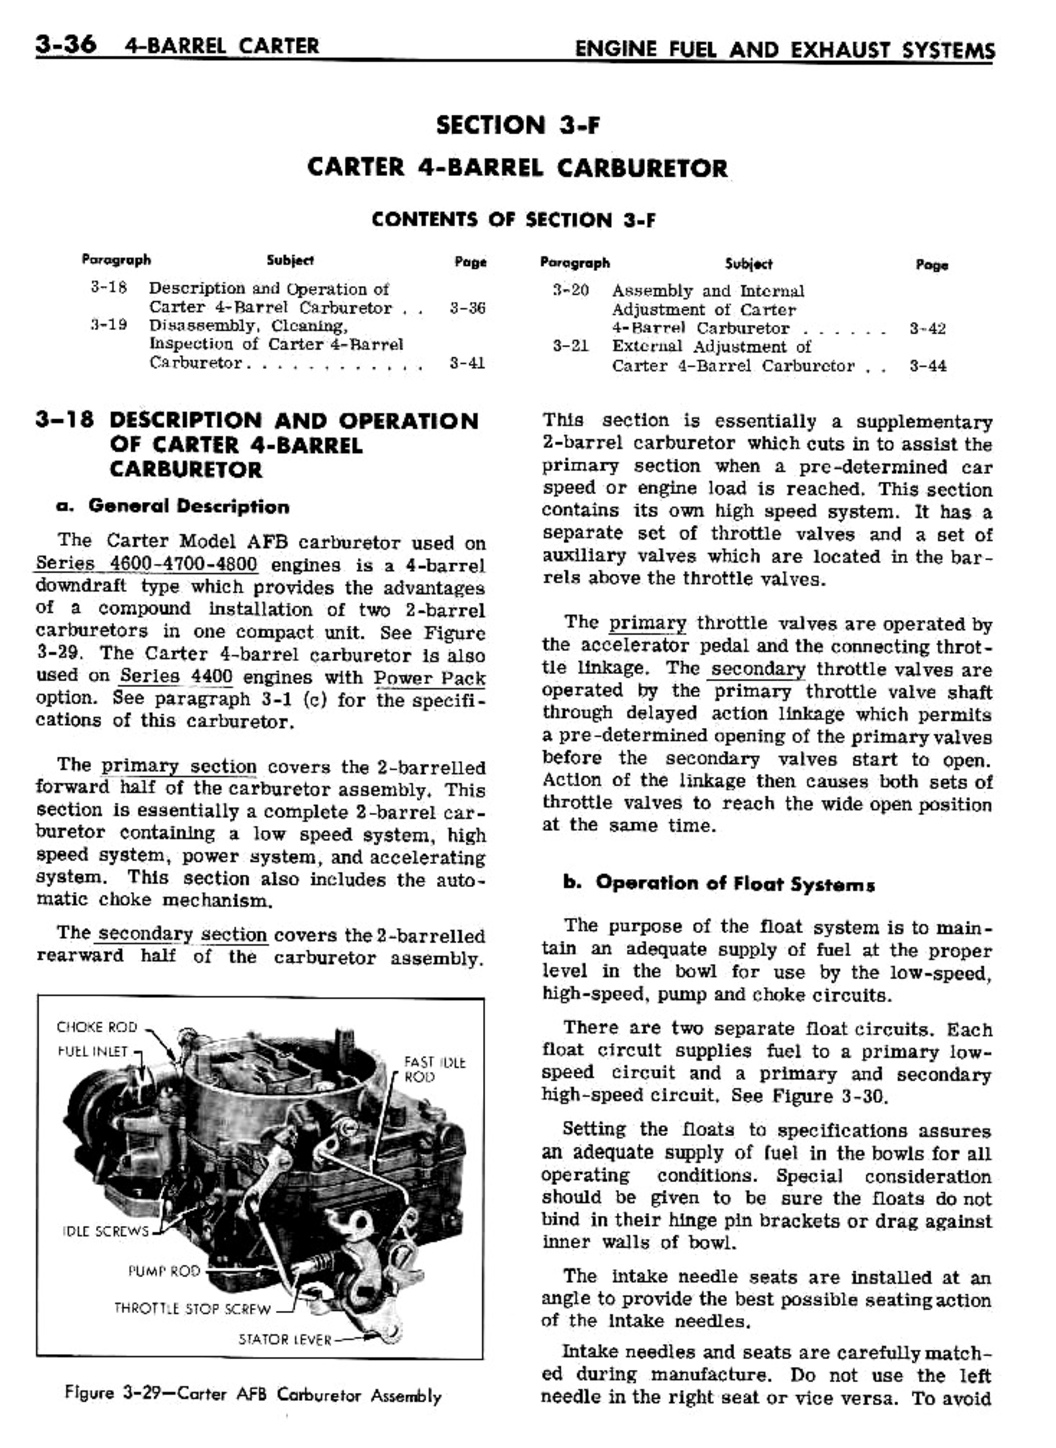 n_04 1961 Buick Shop Manual - Engine Fuel & Exhaust-036-036.jpg